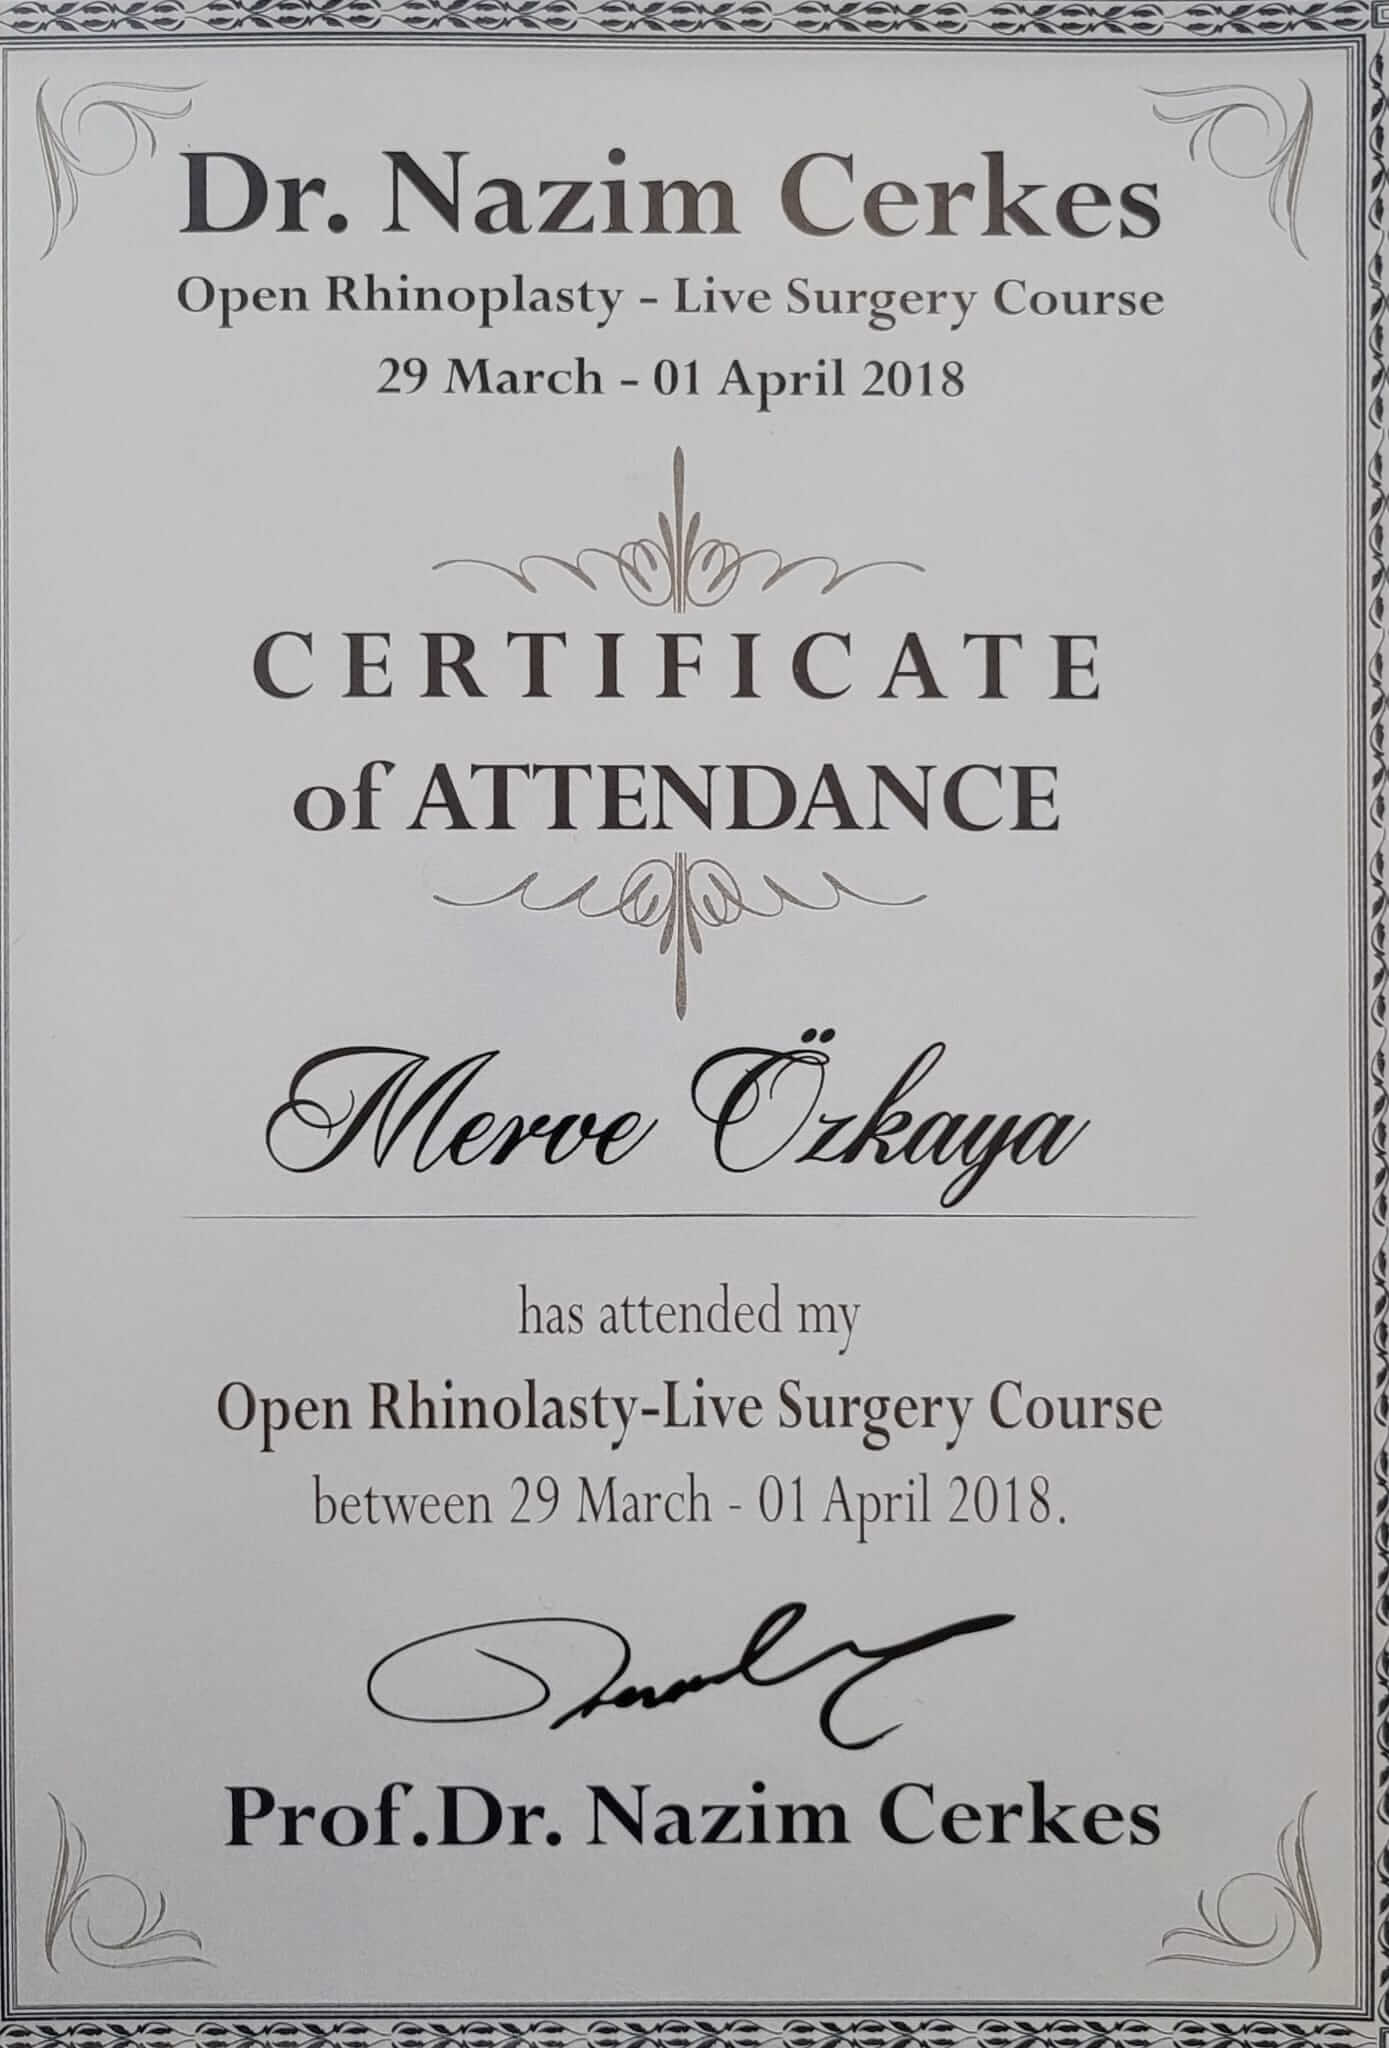 Open rhinoplasty-live surgery course - merve ozkaya